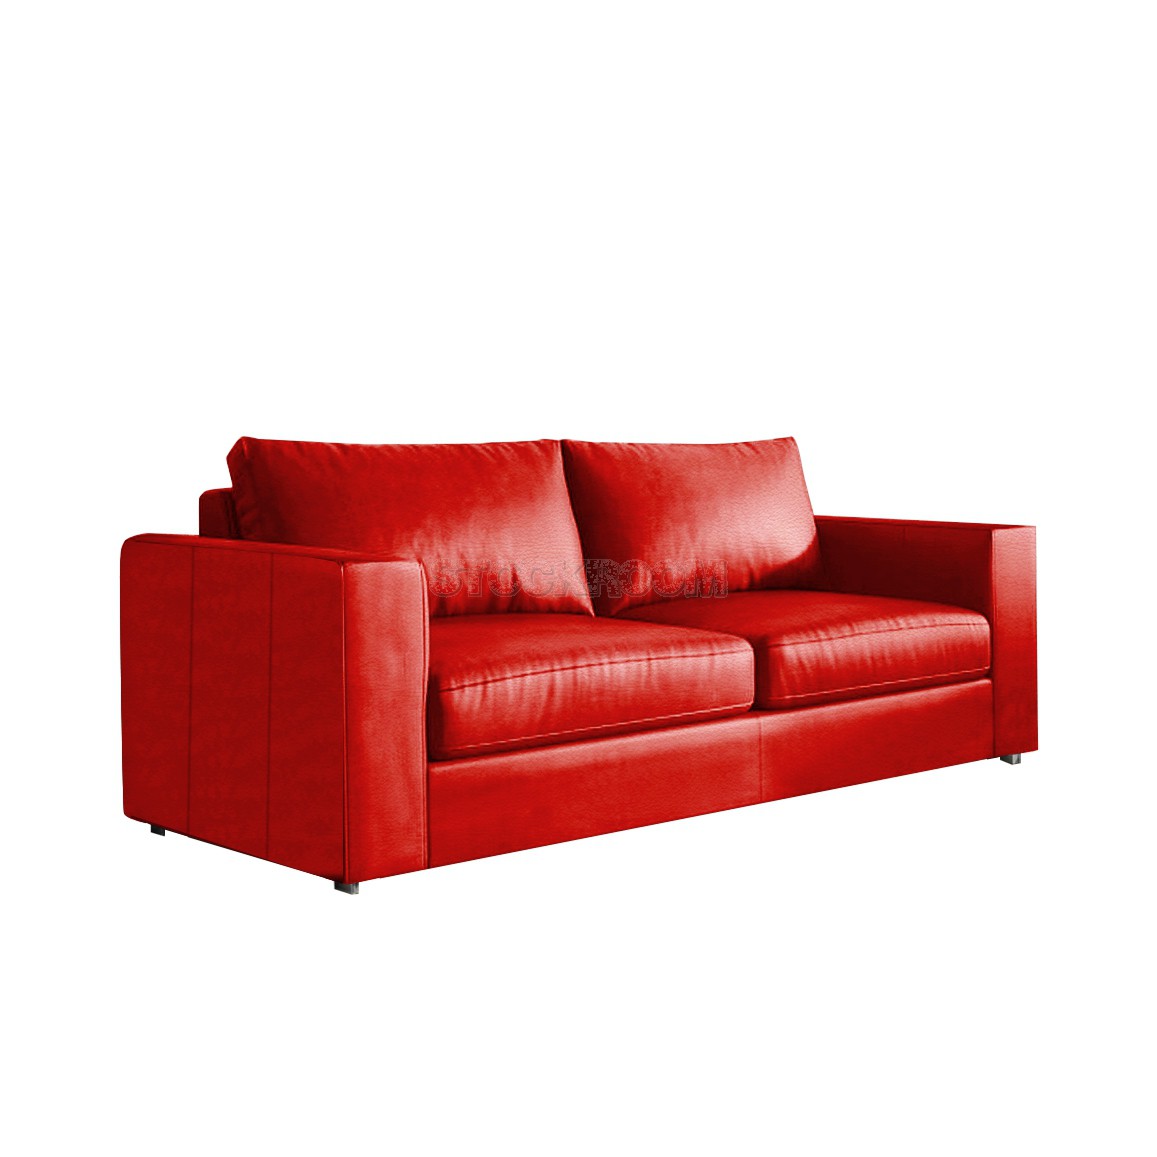 Kagan Leather Feather Down Sofa - 2 seater